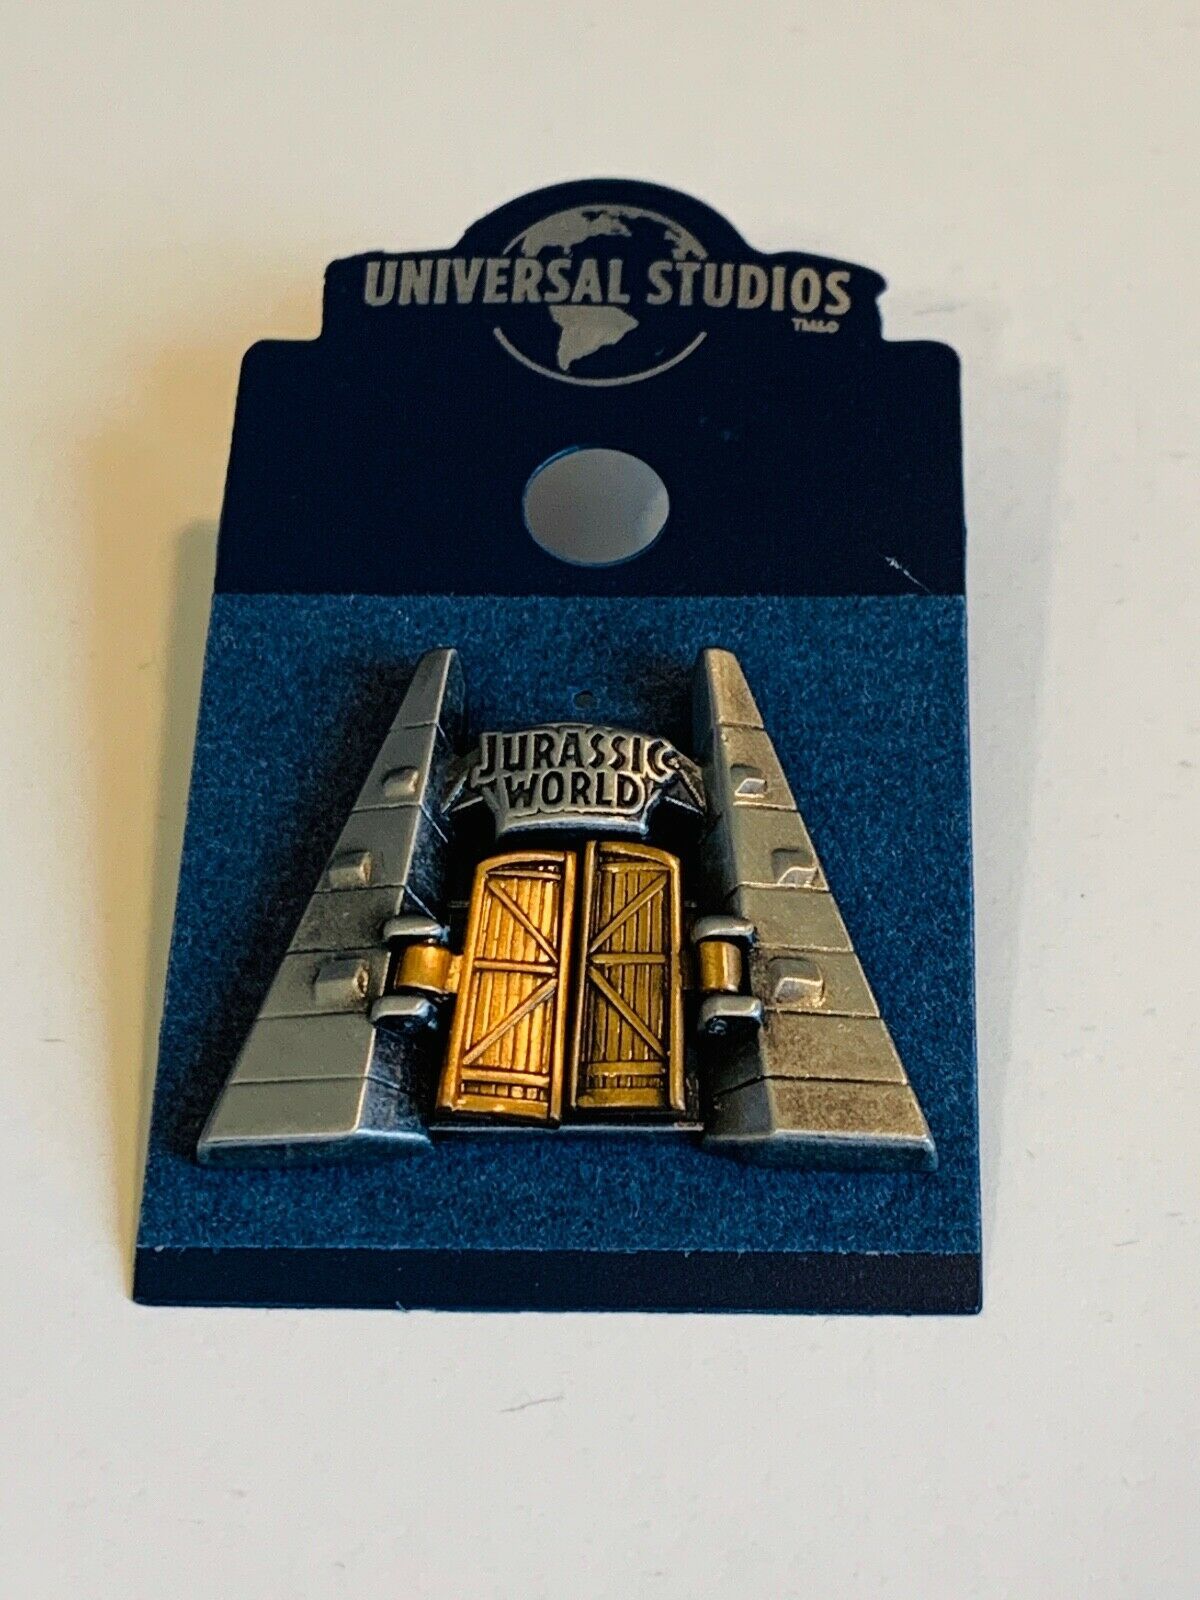 Universal Studios Jurassic World Entrance and 20 similar items